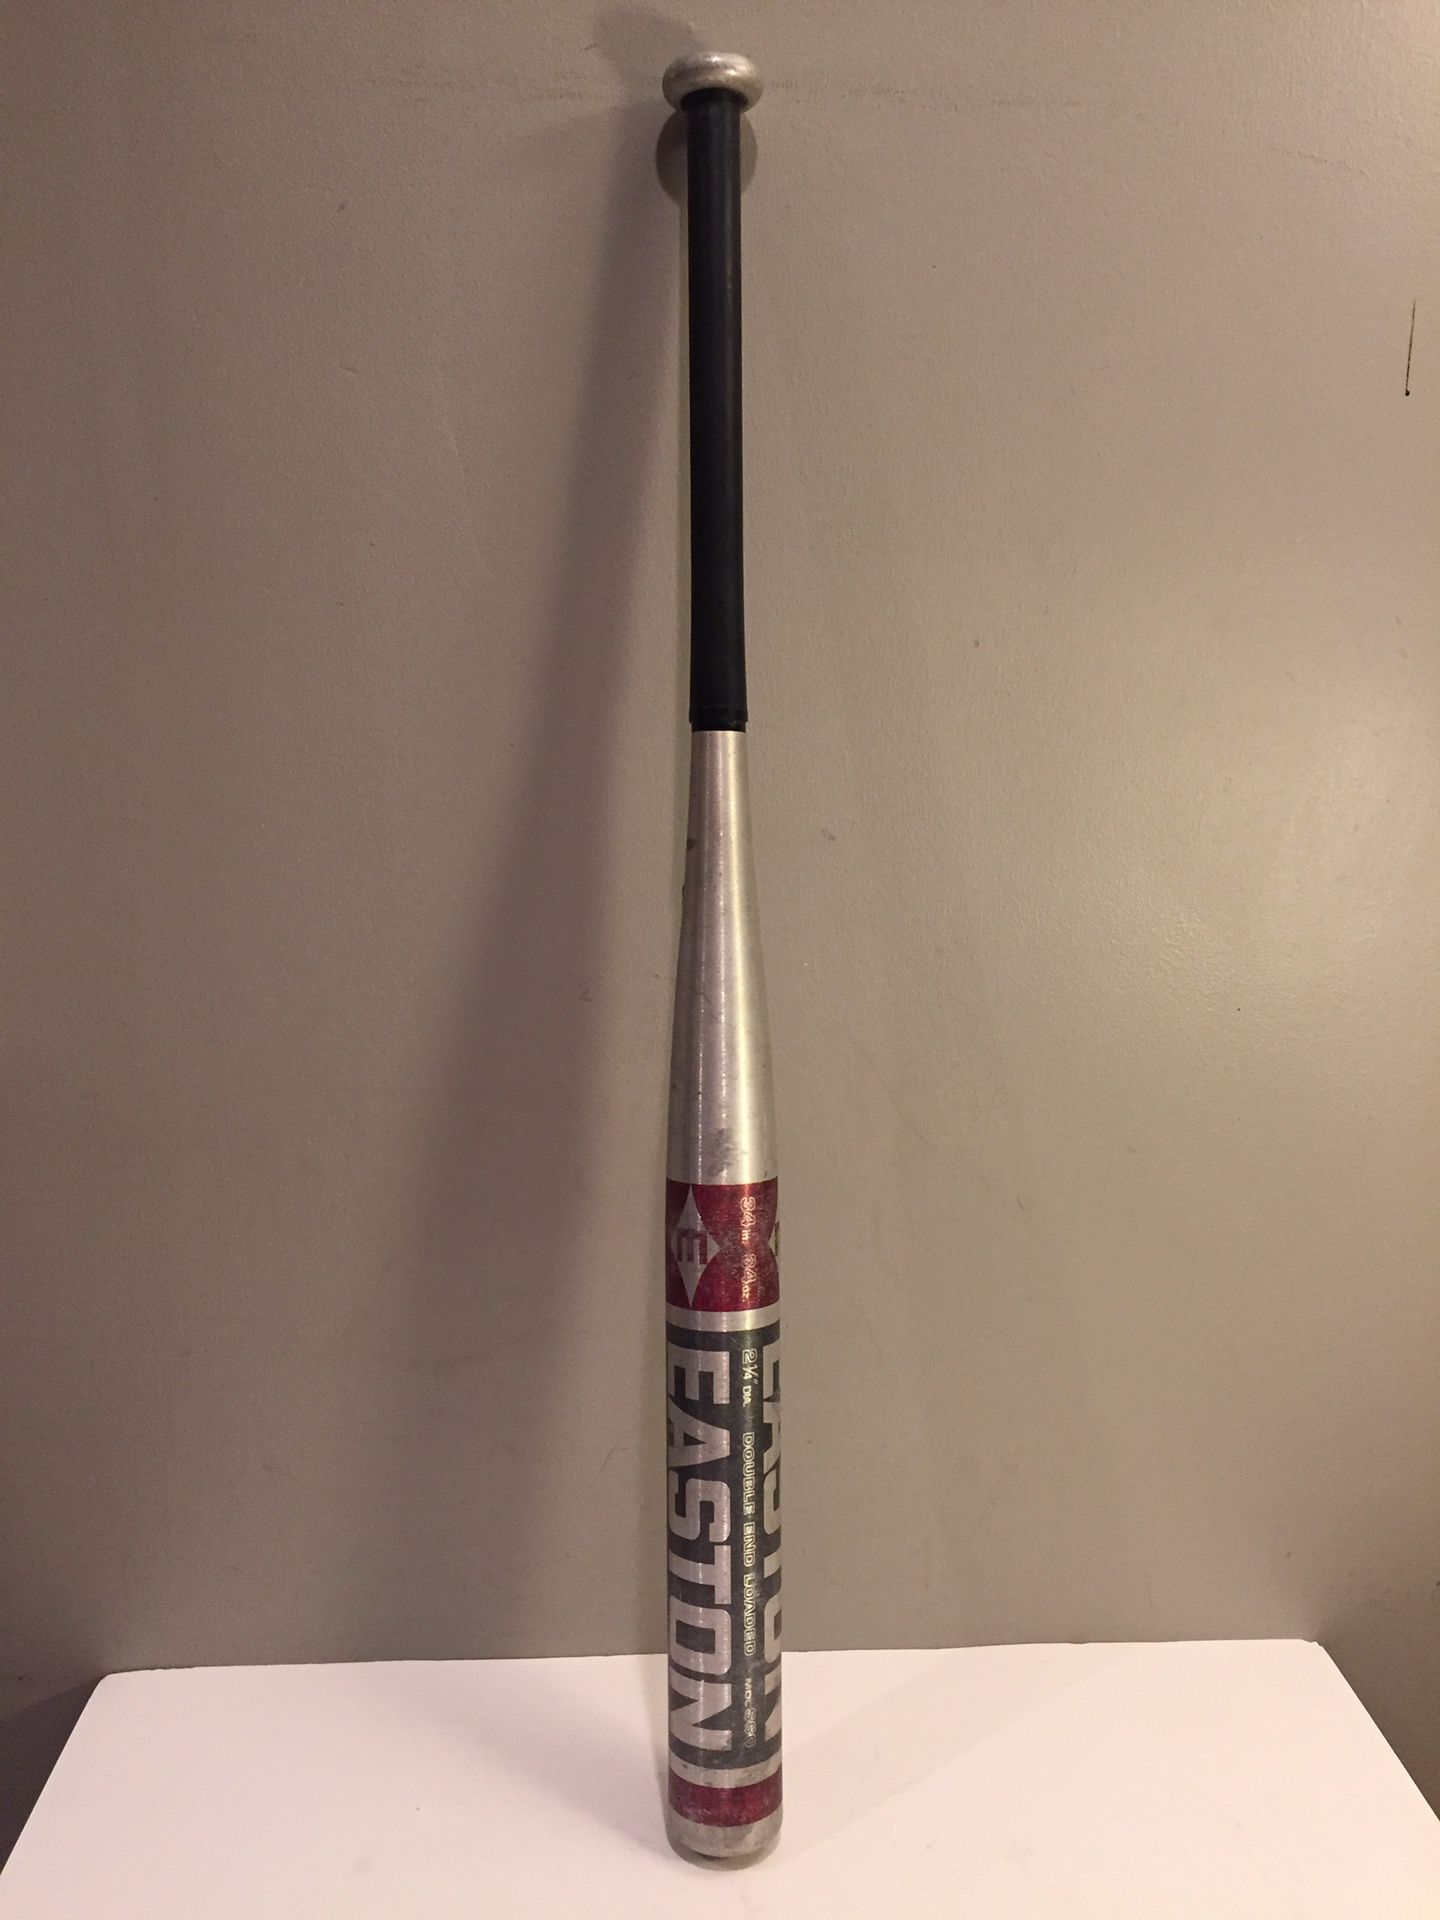 Easton 34/34 Softball Bat - 34 Inches 34 Ounces - Vintage DeBeer Clincher